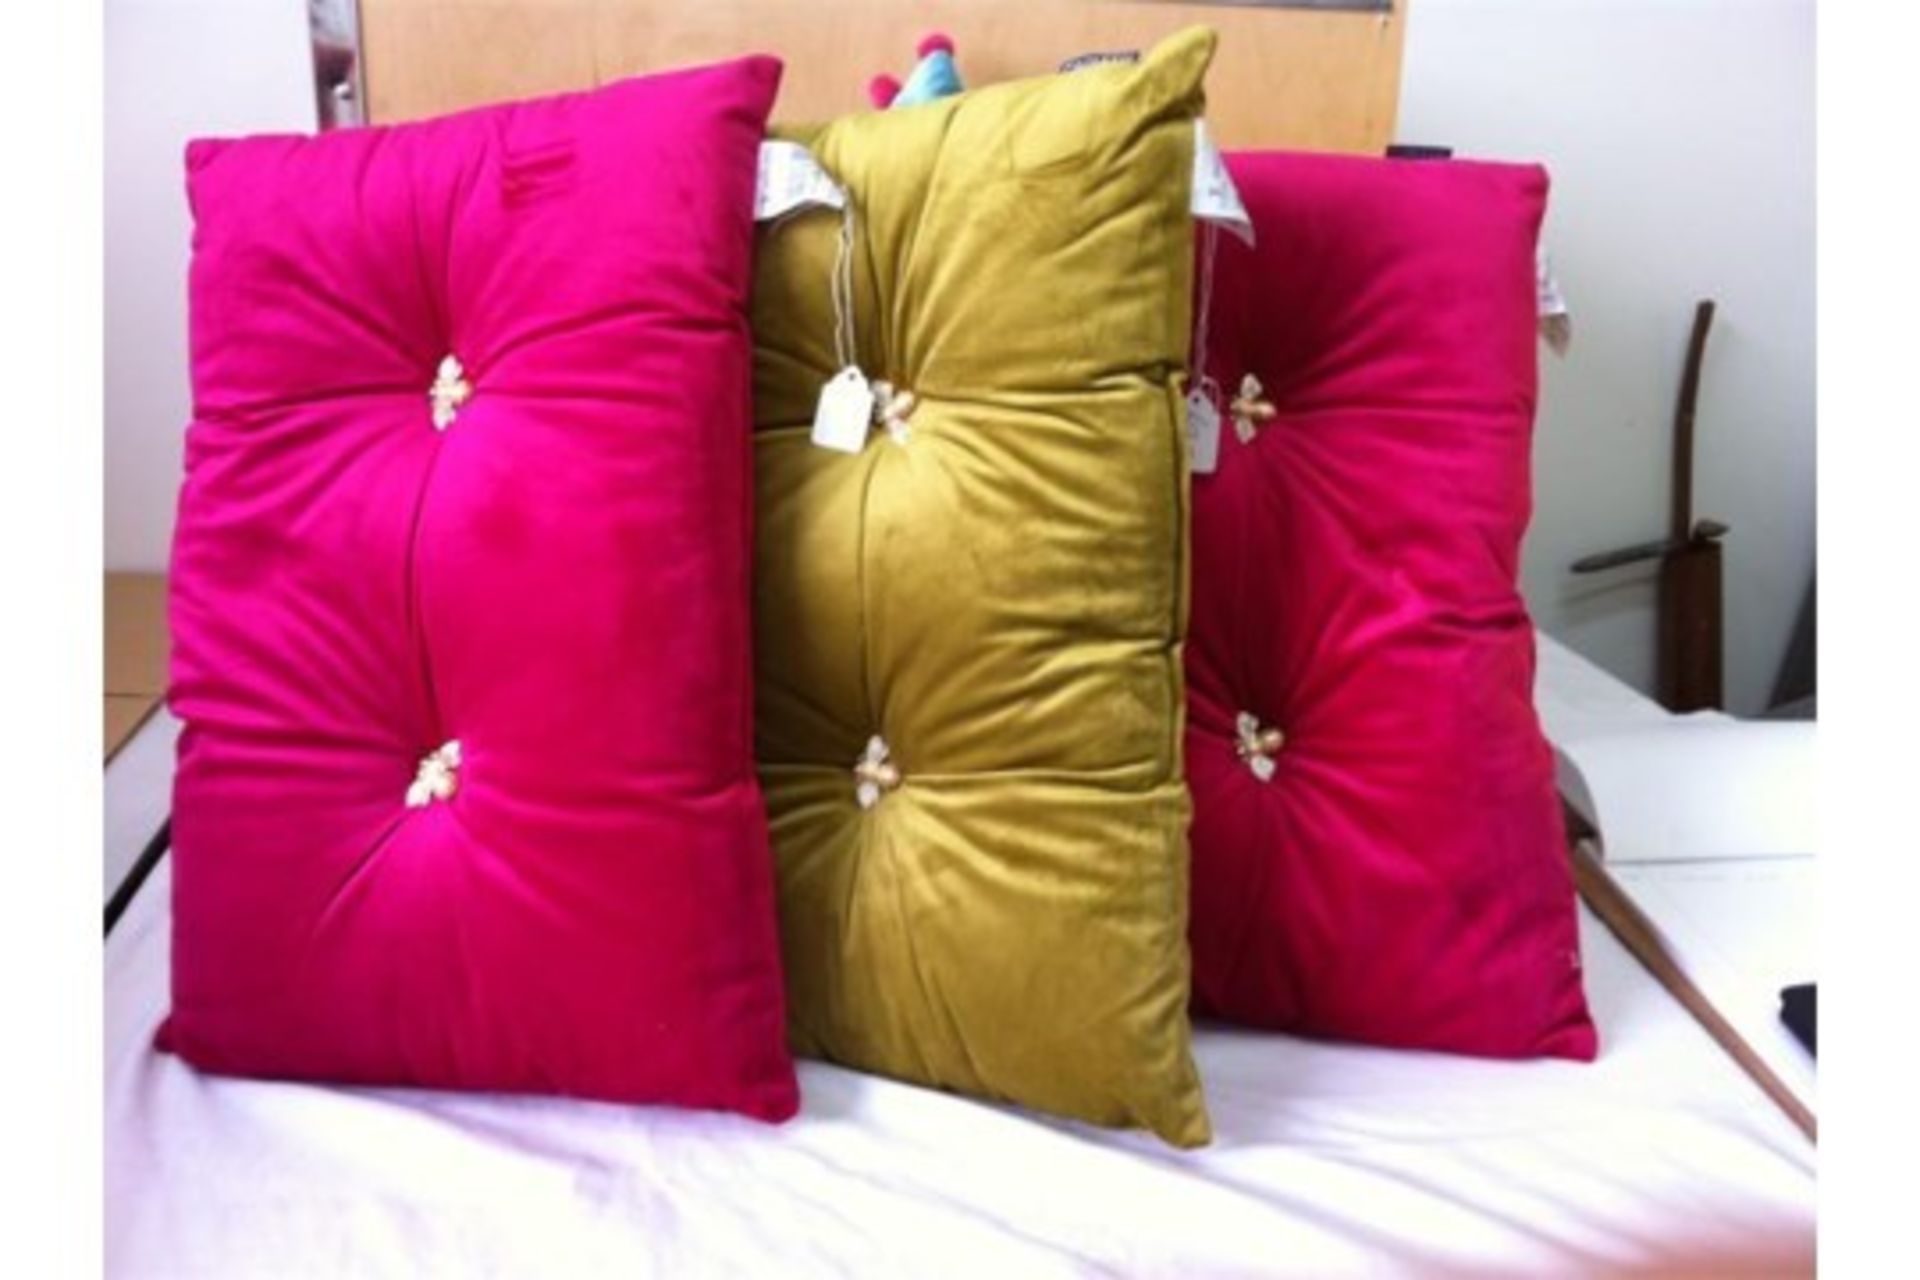 17 x cushions. See description for sizes/colours/designs